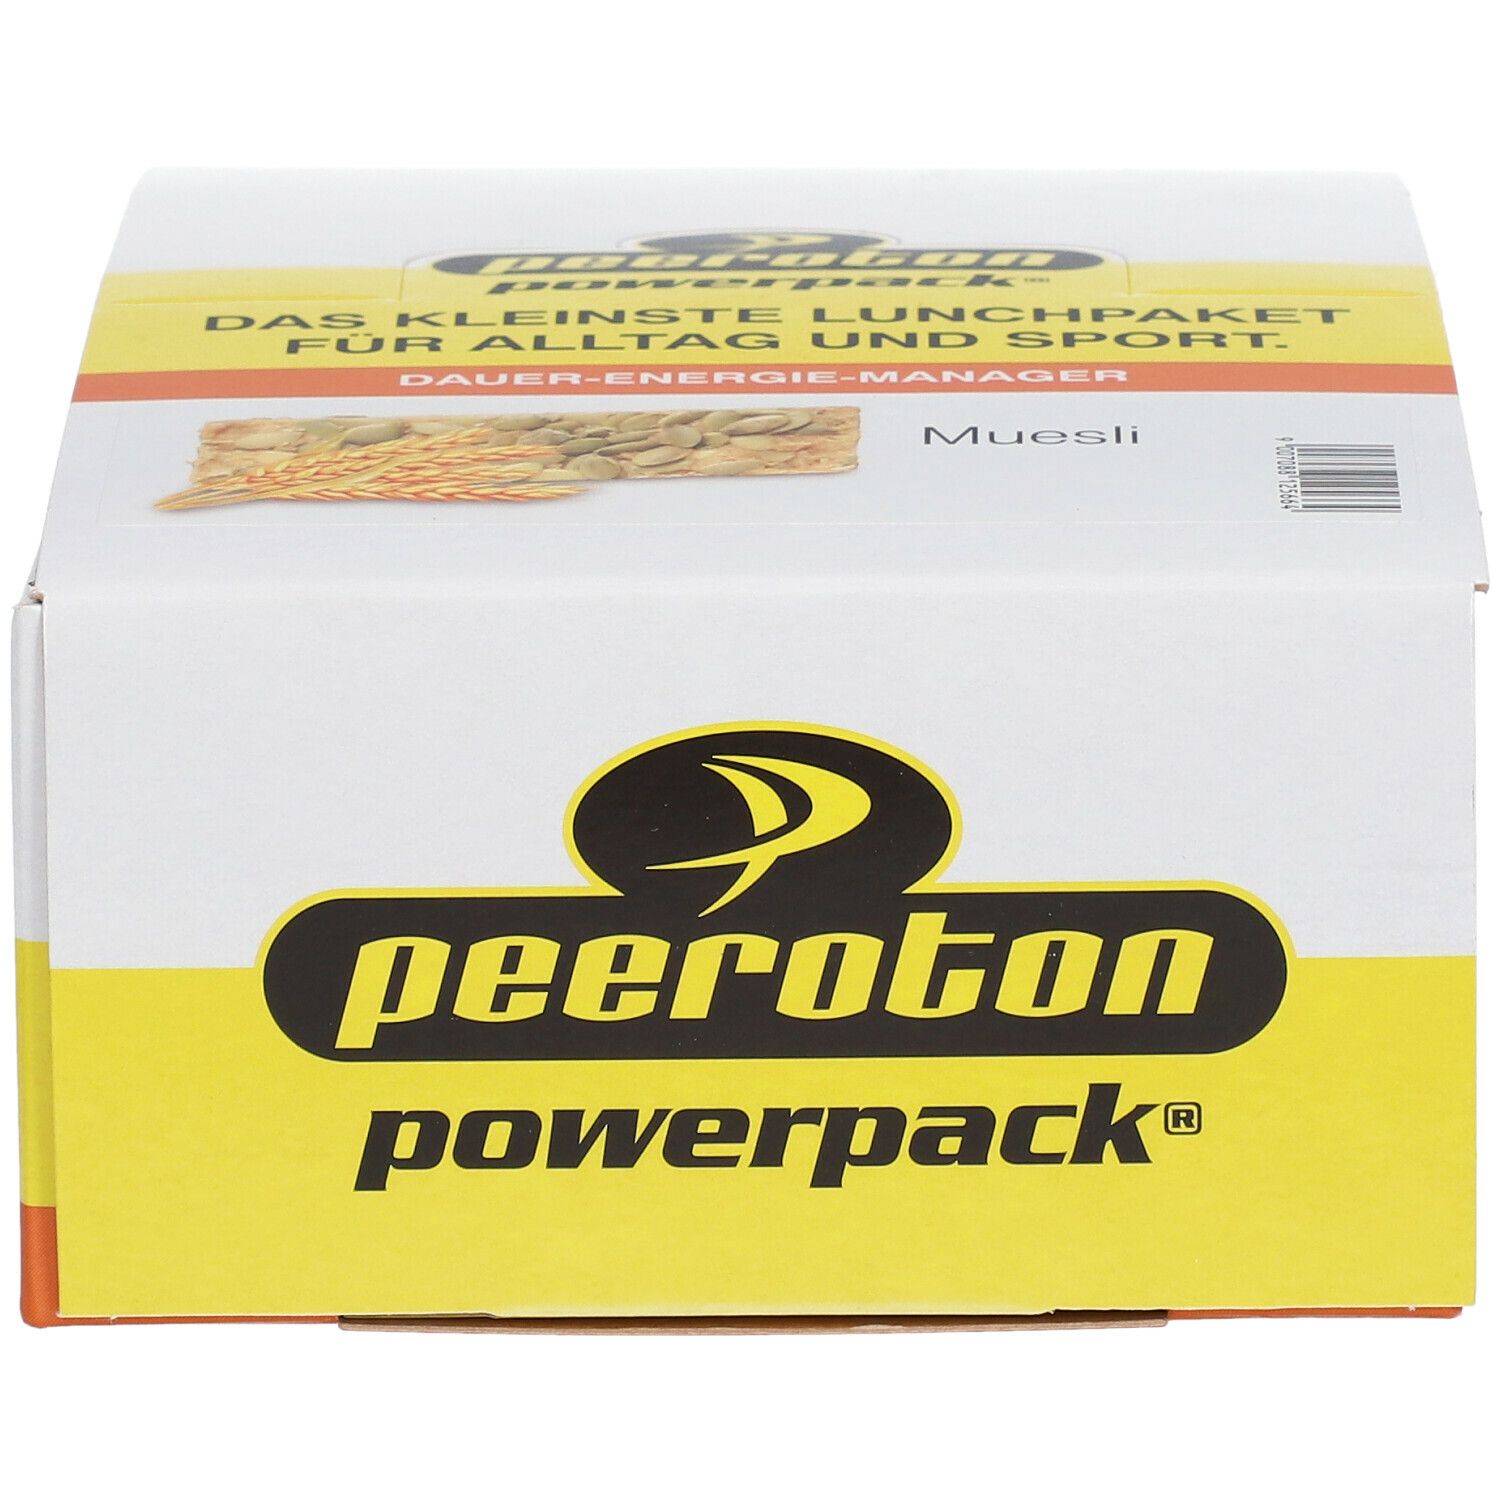 peeroton® POWERPack Riegel Haferflockenriegel Müsli